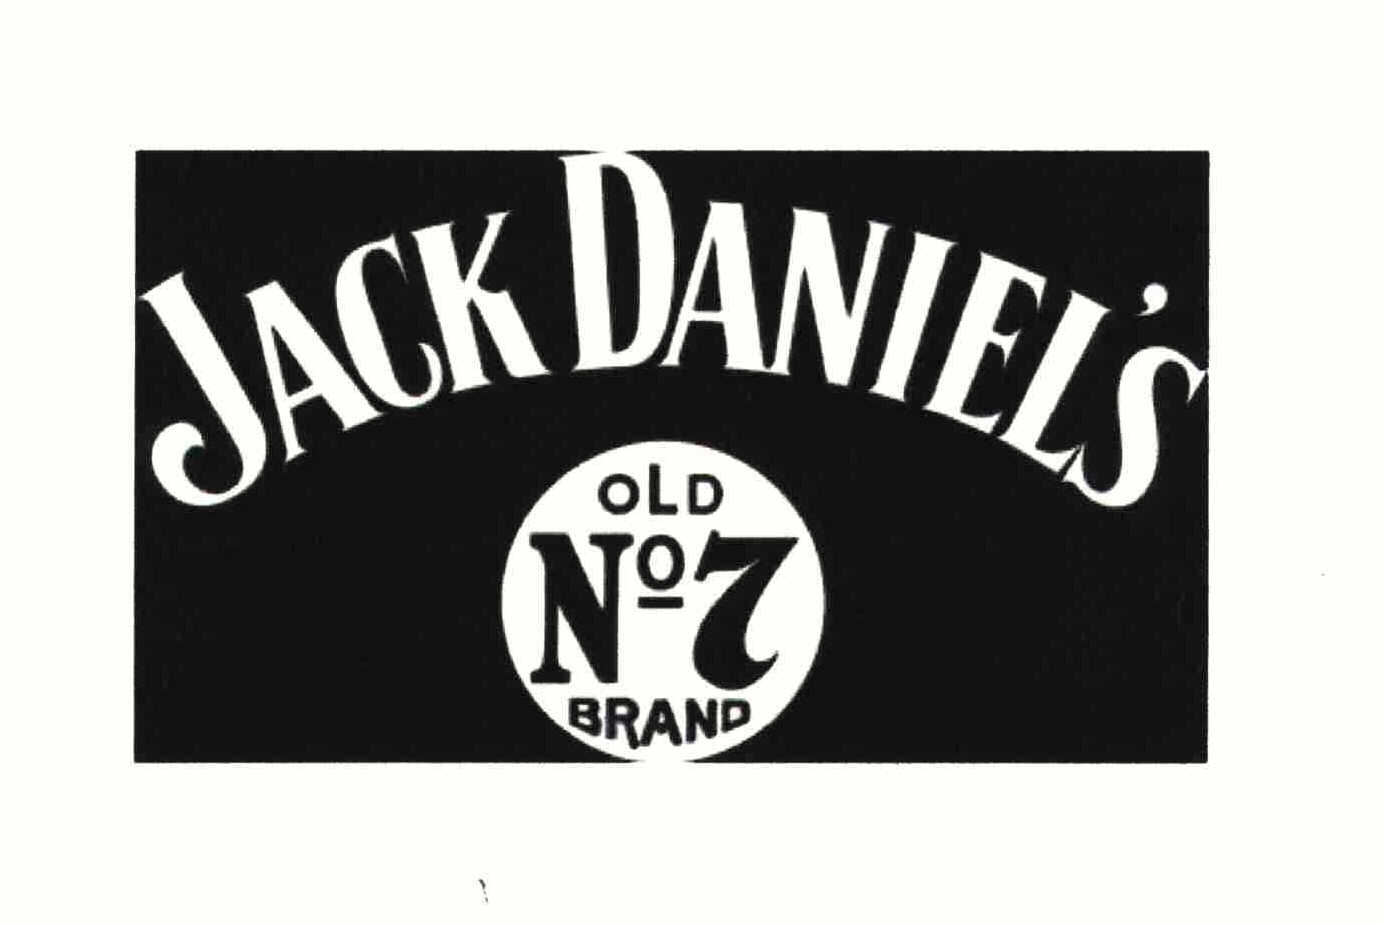  JACK DANIEL'S OLD NO 7 BRAND